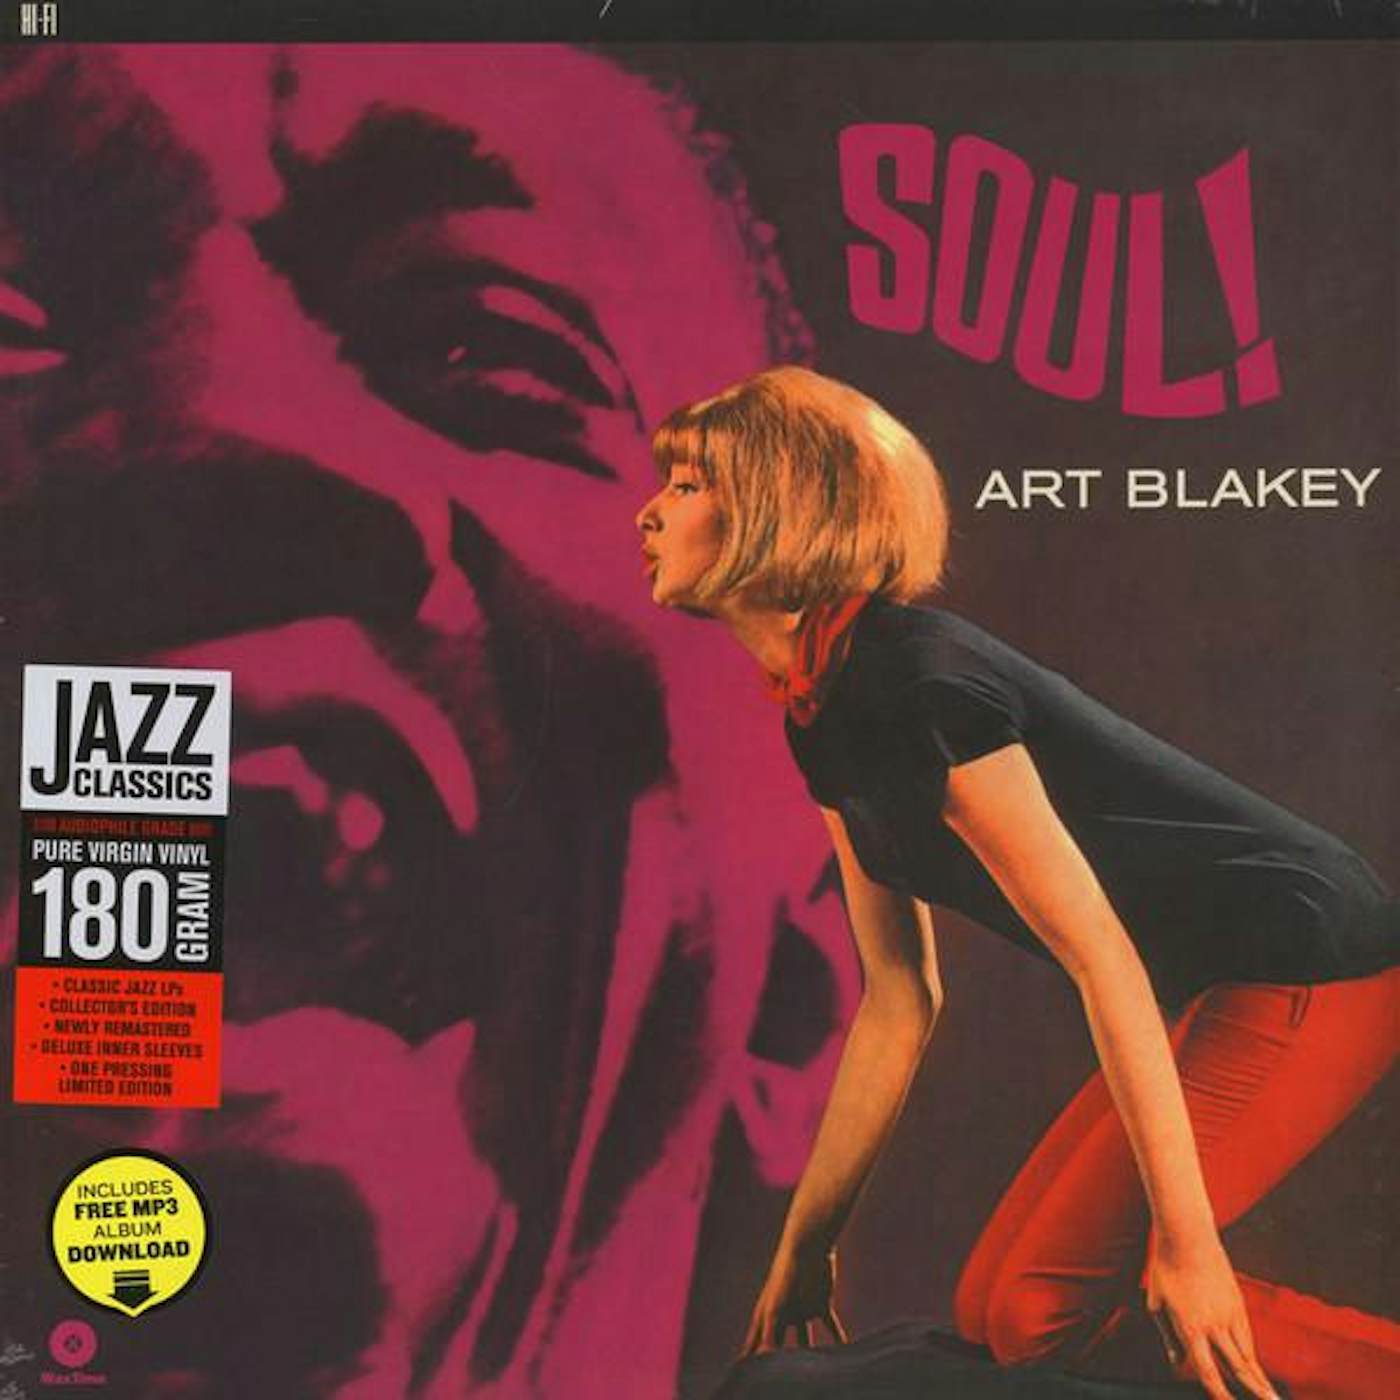 Art Blakey SOUL Vinyl Record - Spain Release